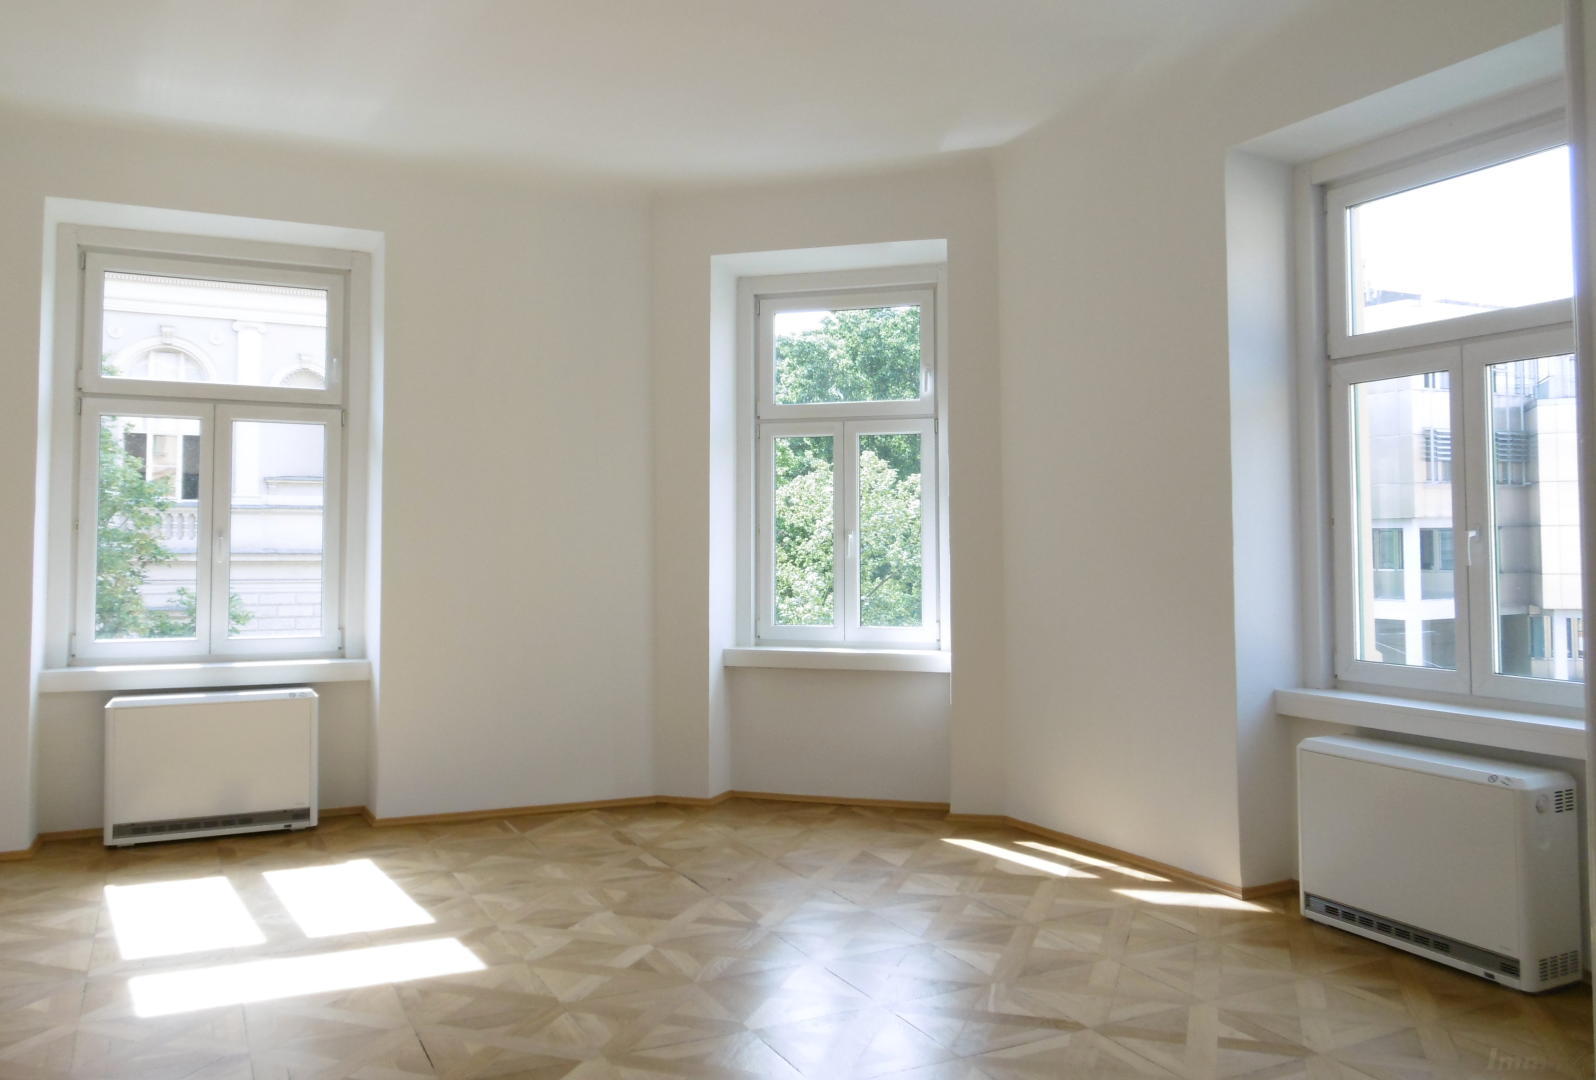 Wohnung zum Mieten: 8010 Graz - P1010006